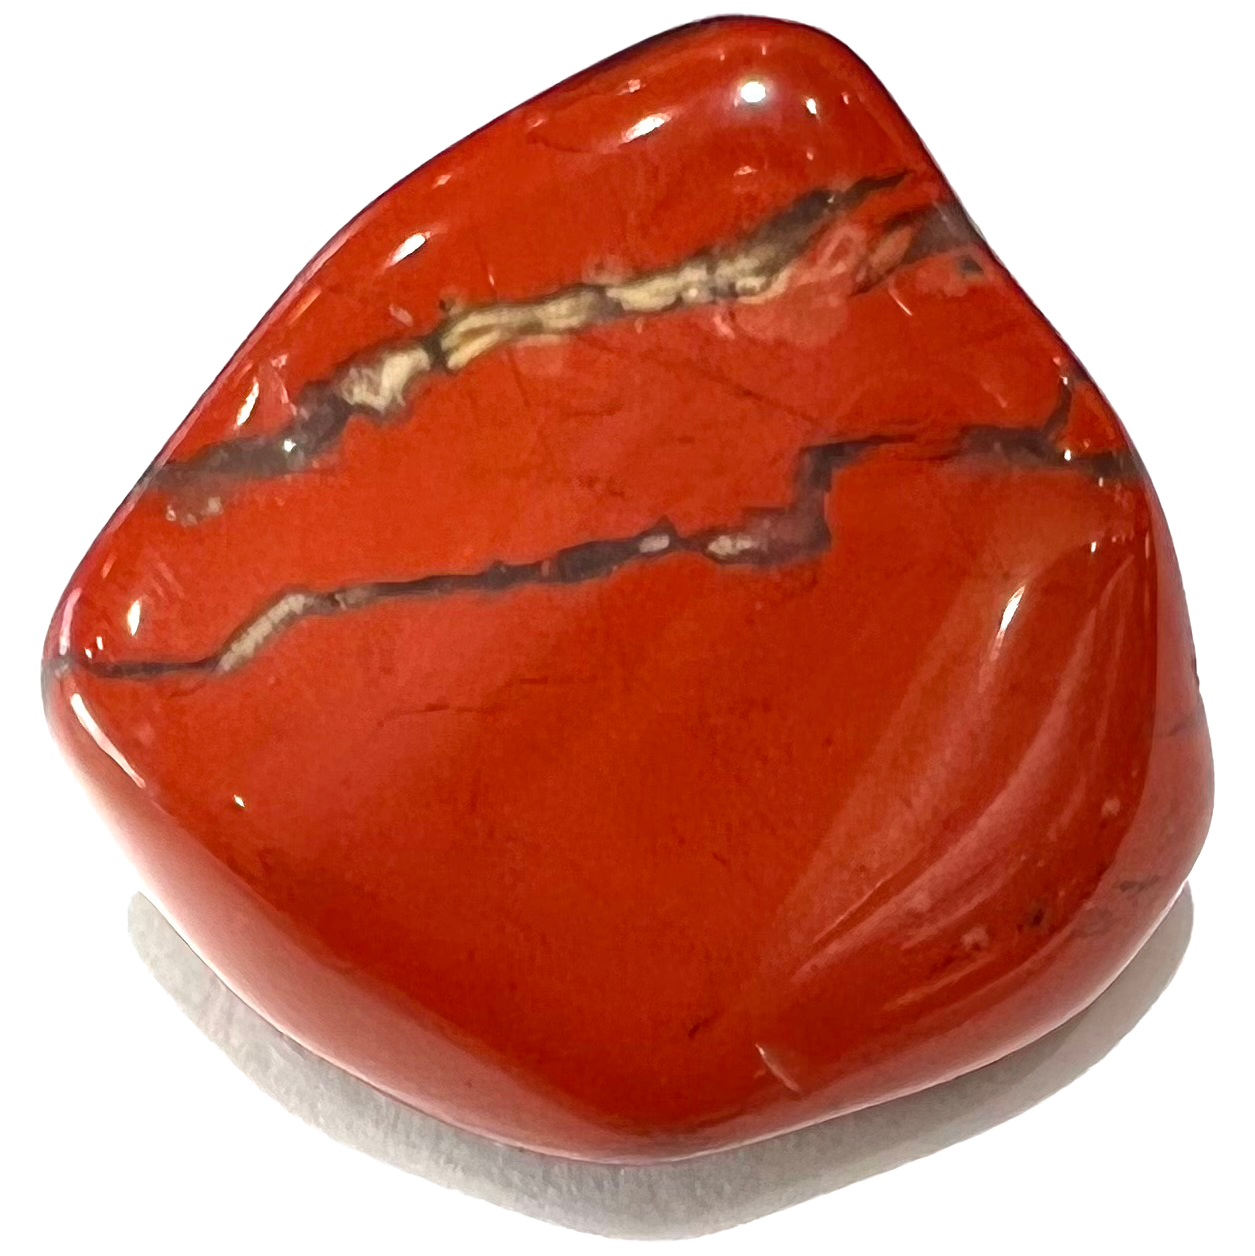 A tumbled red jasper stone.  Streaks of brown jasper run through the stone.